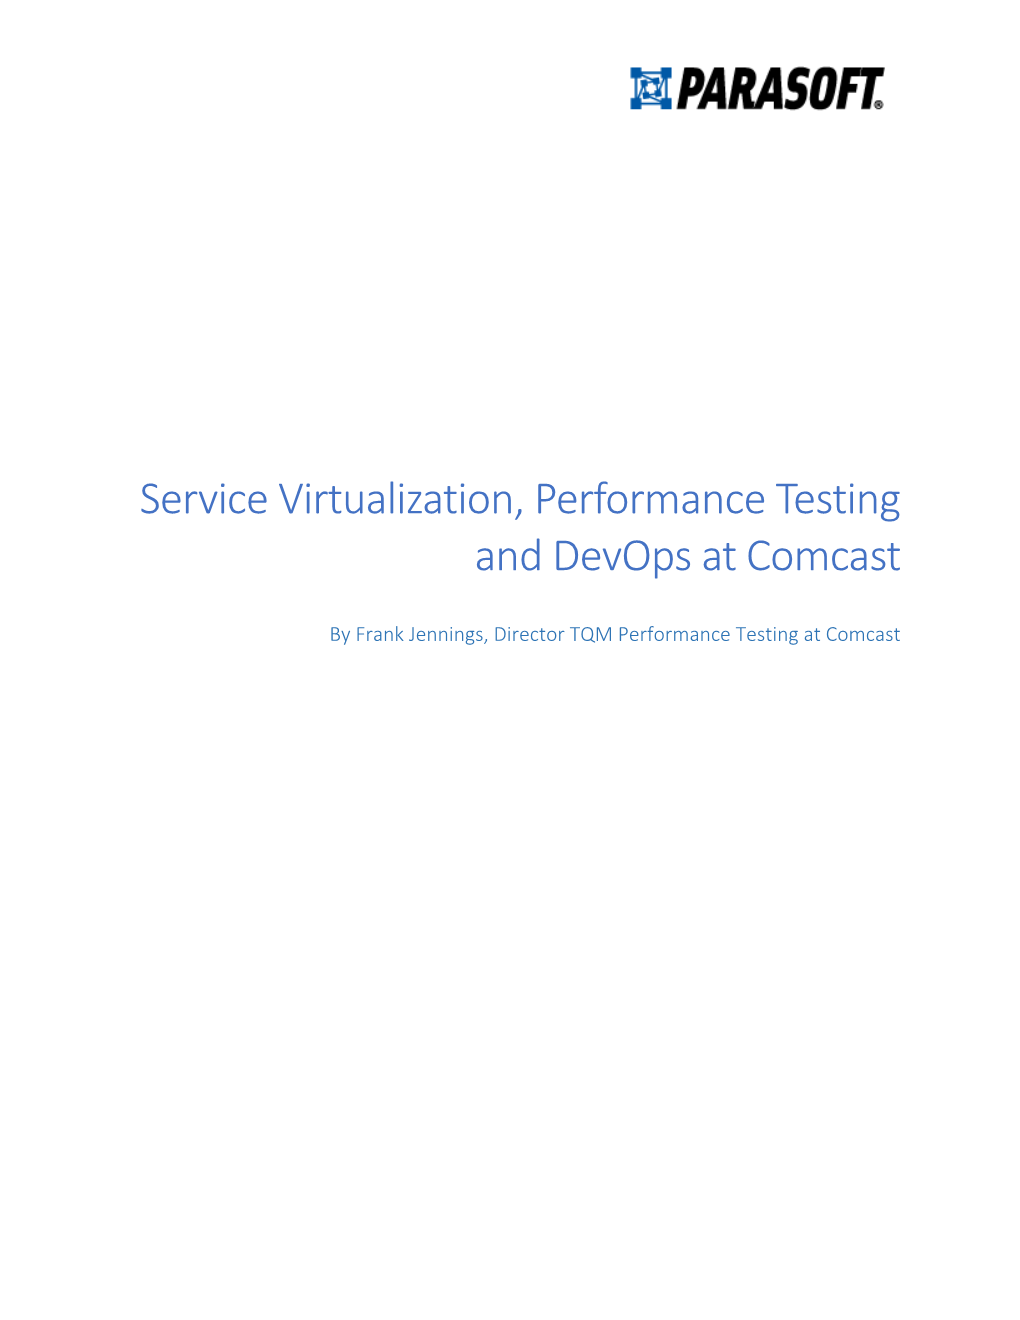 Service Virtualization, Performance Testing and Devops at Comcast